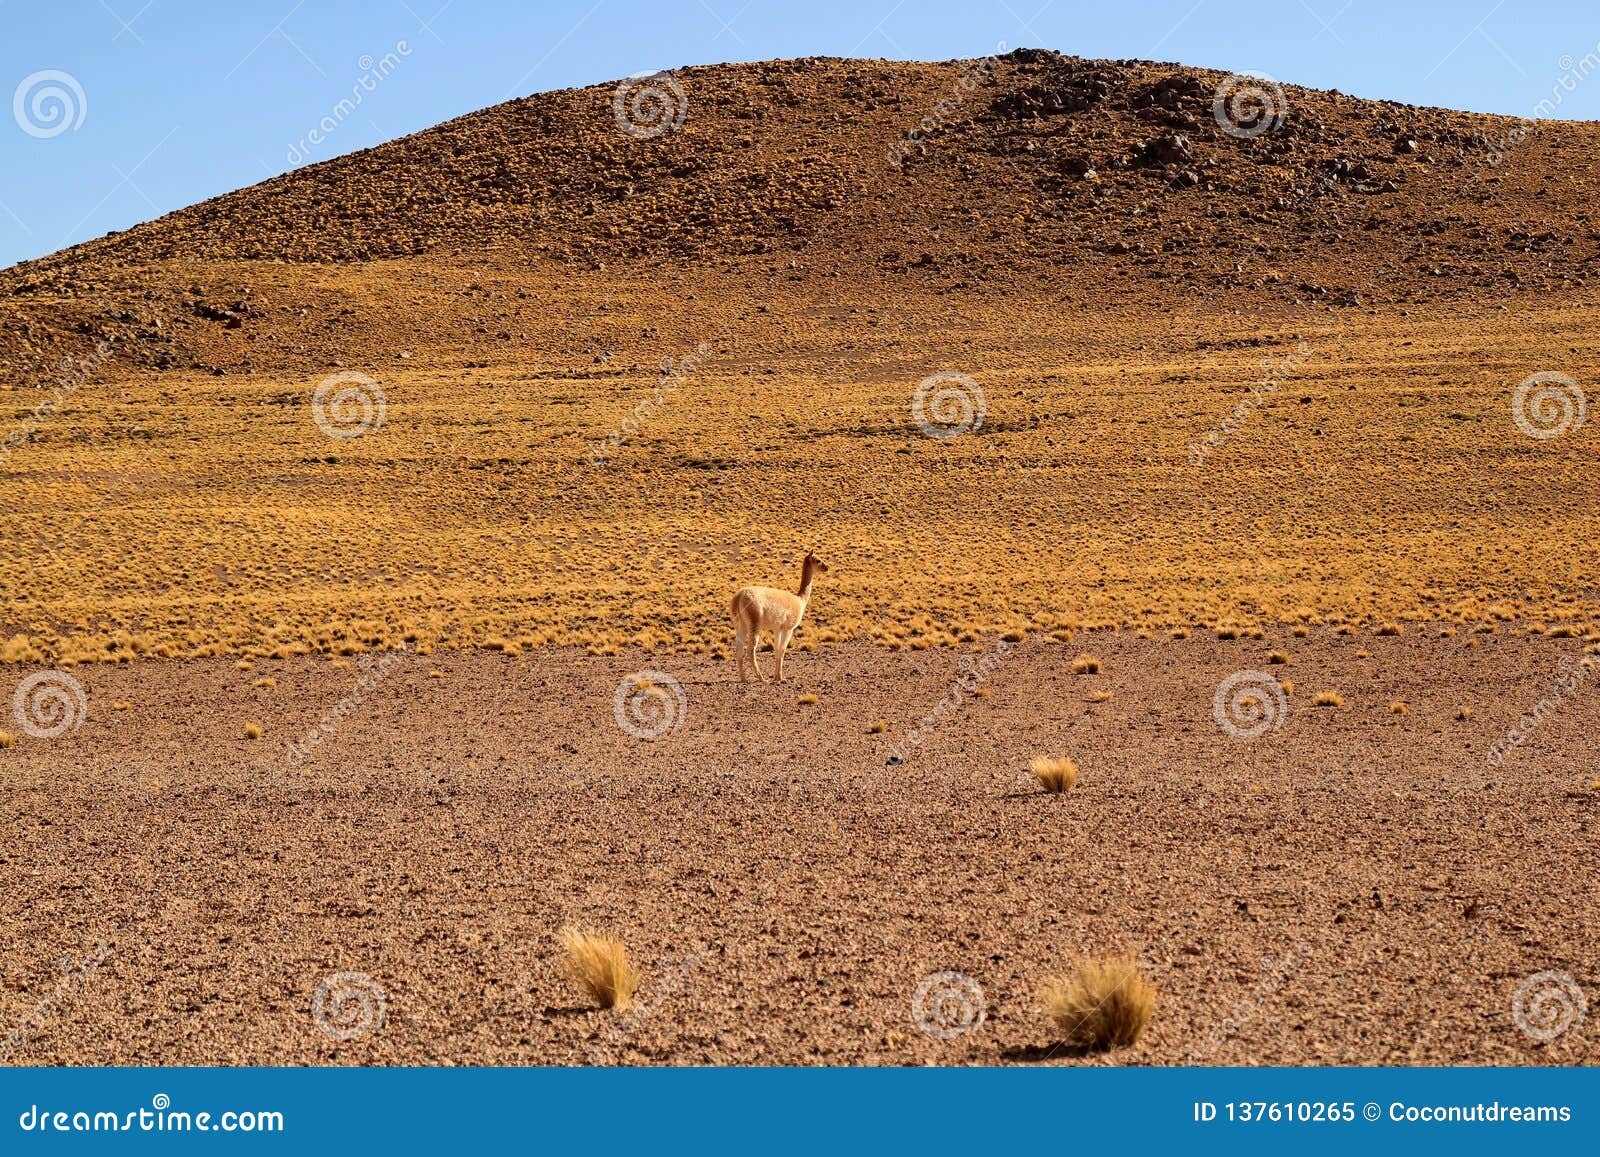 wild vicuna at the foothills of the chilean andes, los flamencos national reserve, san pedro de atacama, antofagasta region, chile